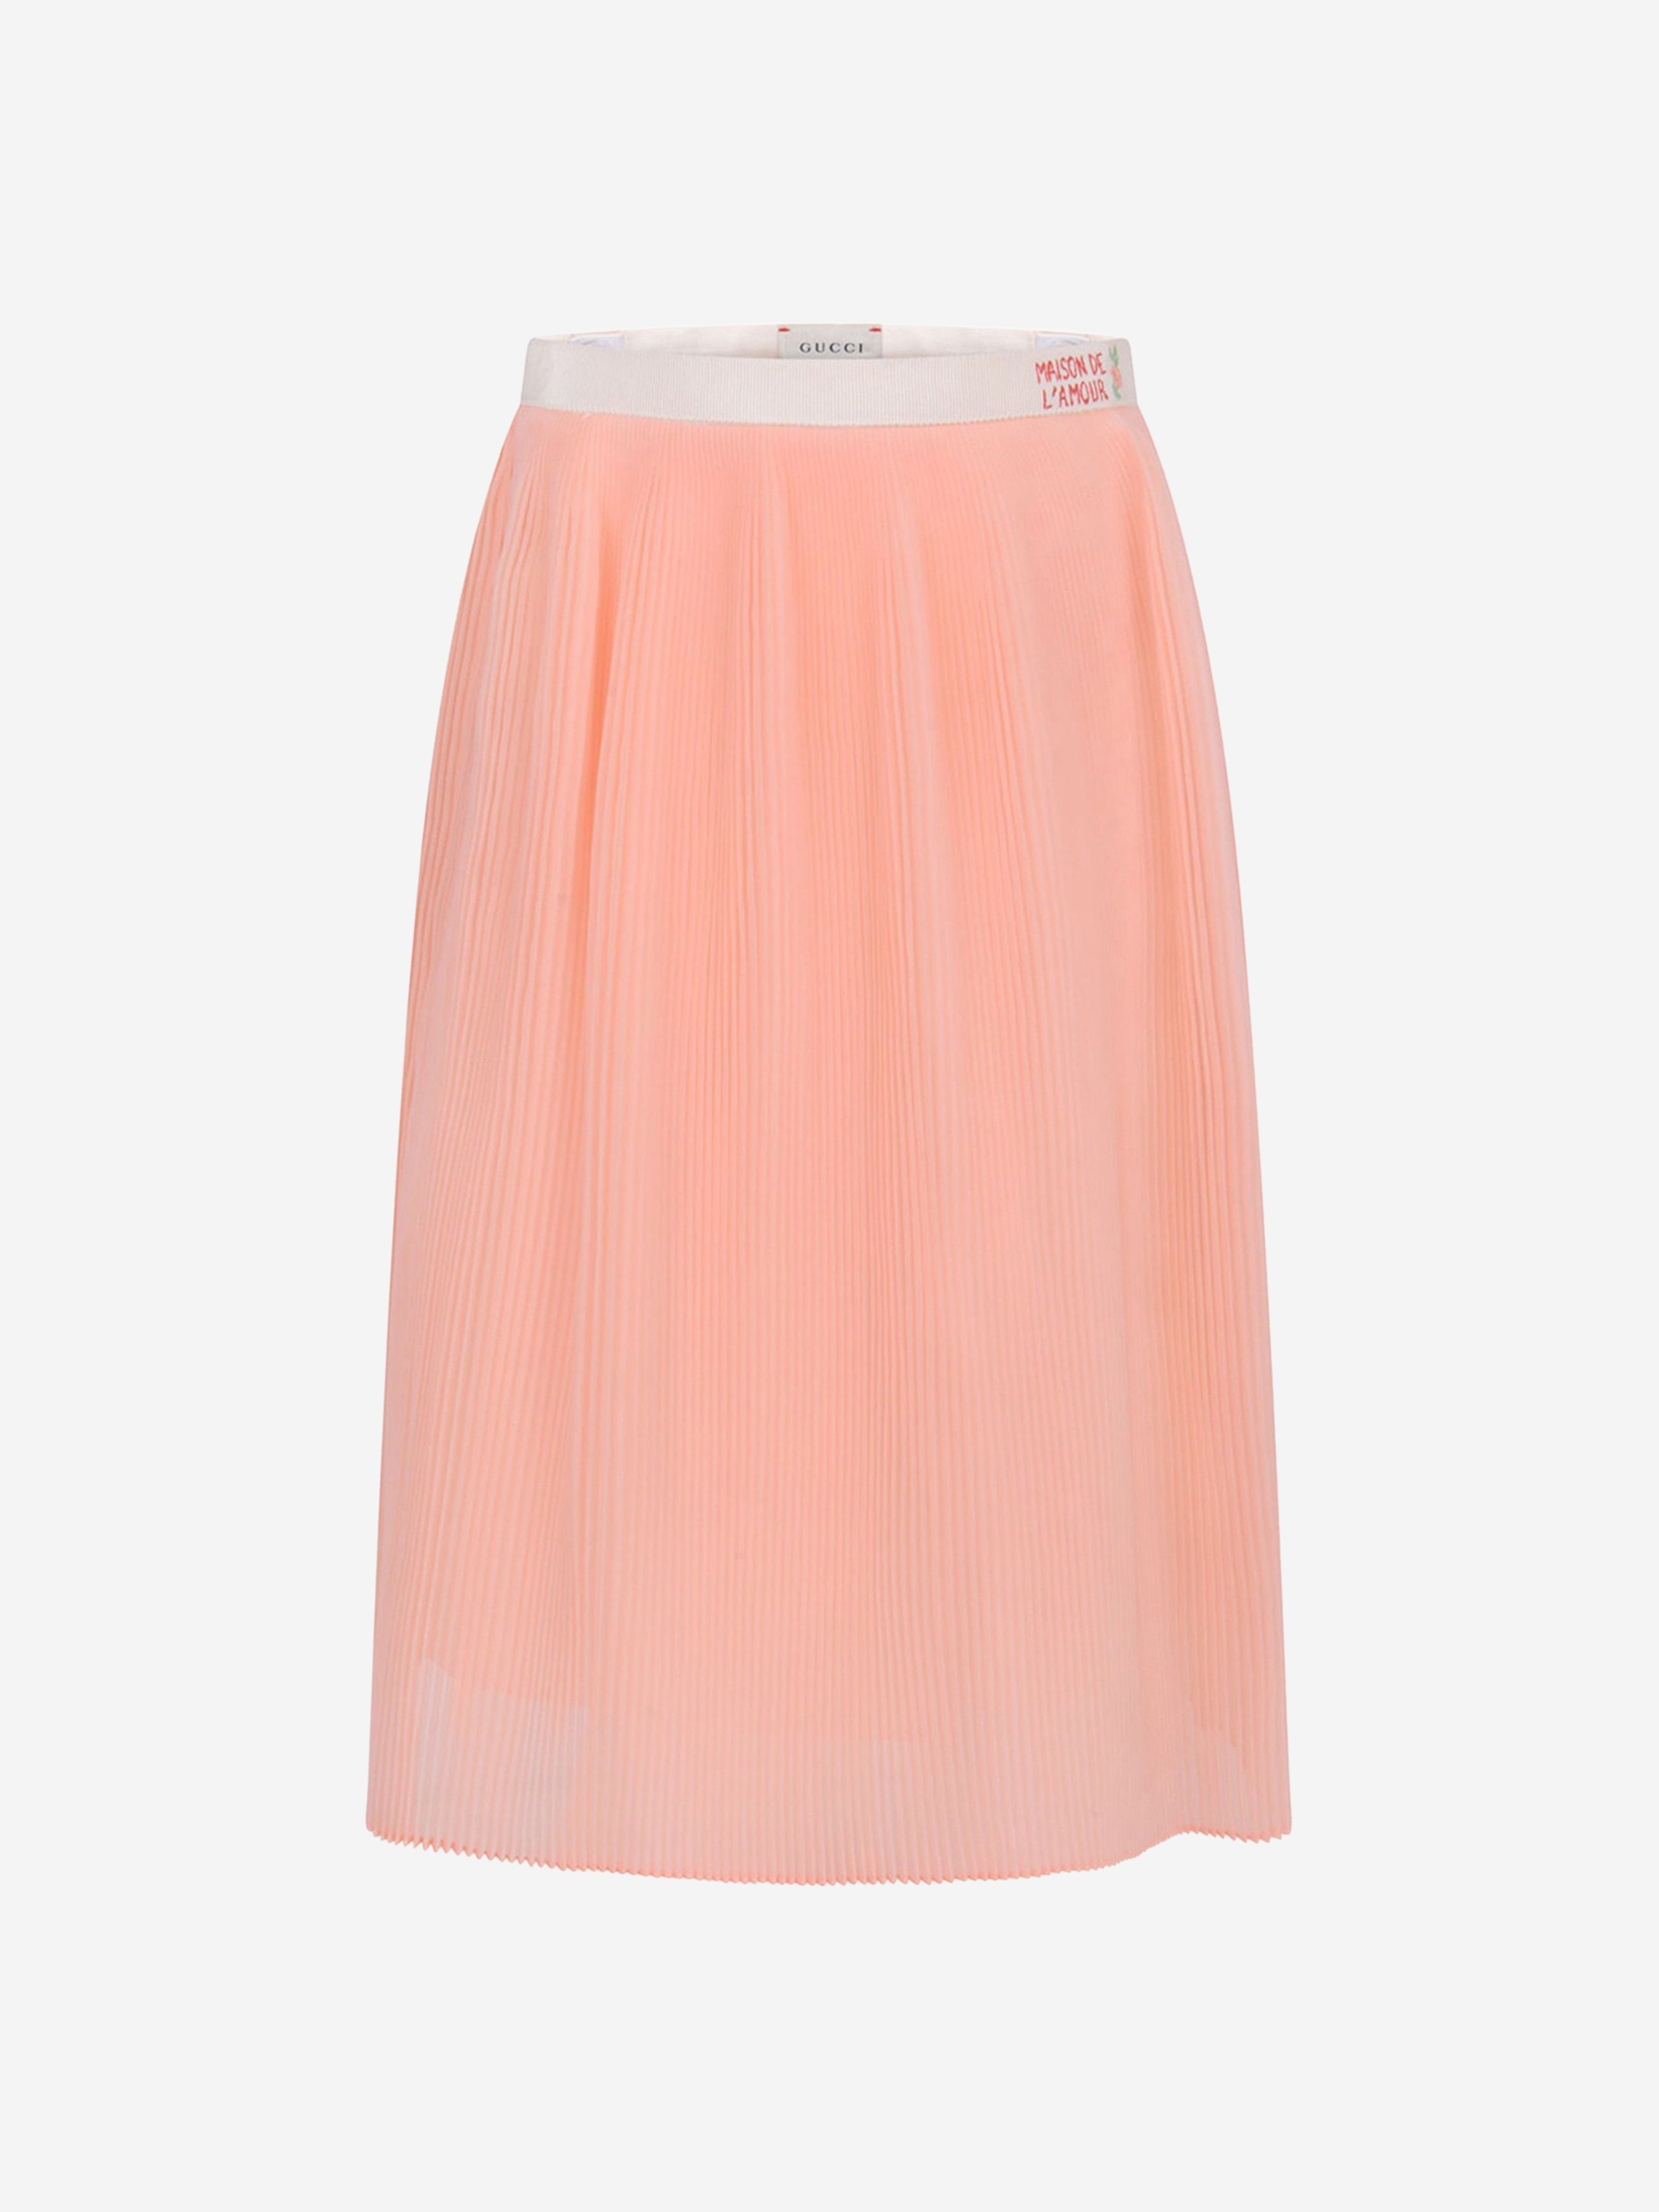 Gucci Kids' Girls Organza Skirt 8 Yrs Pink